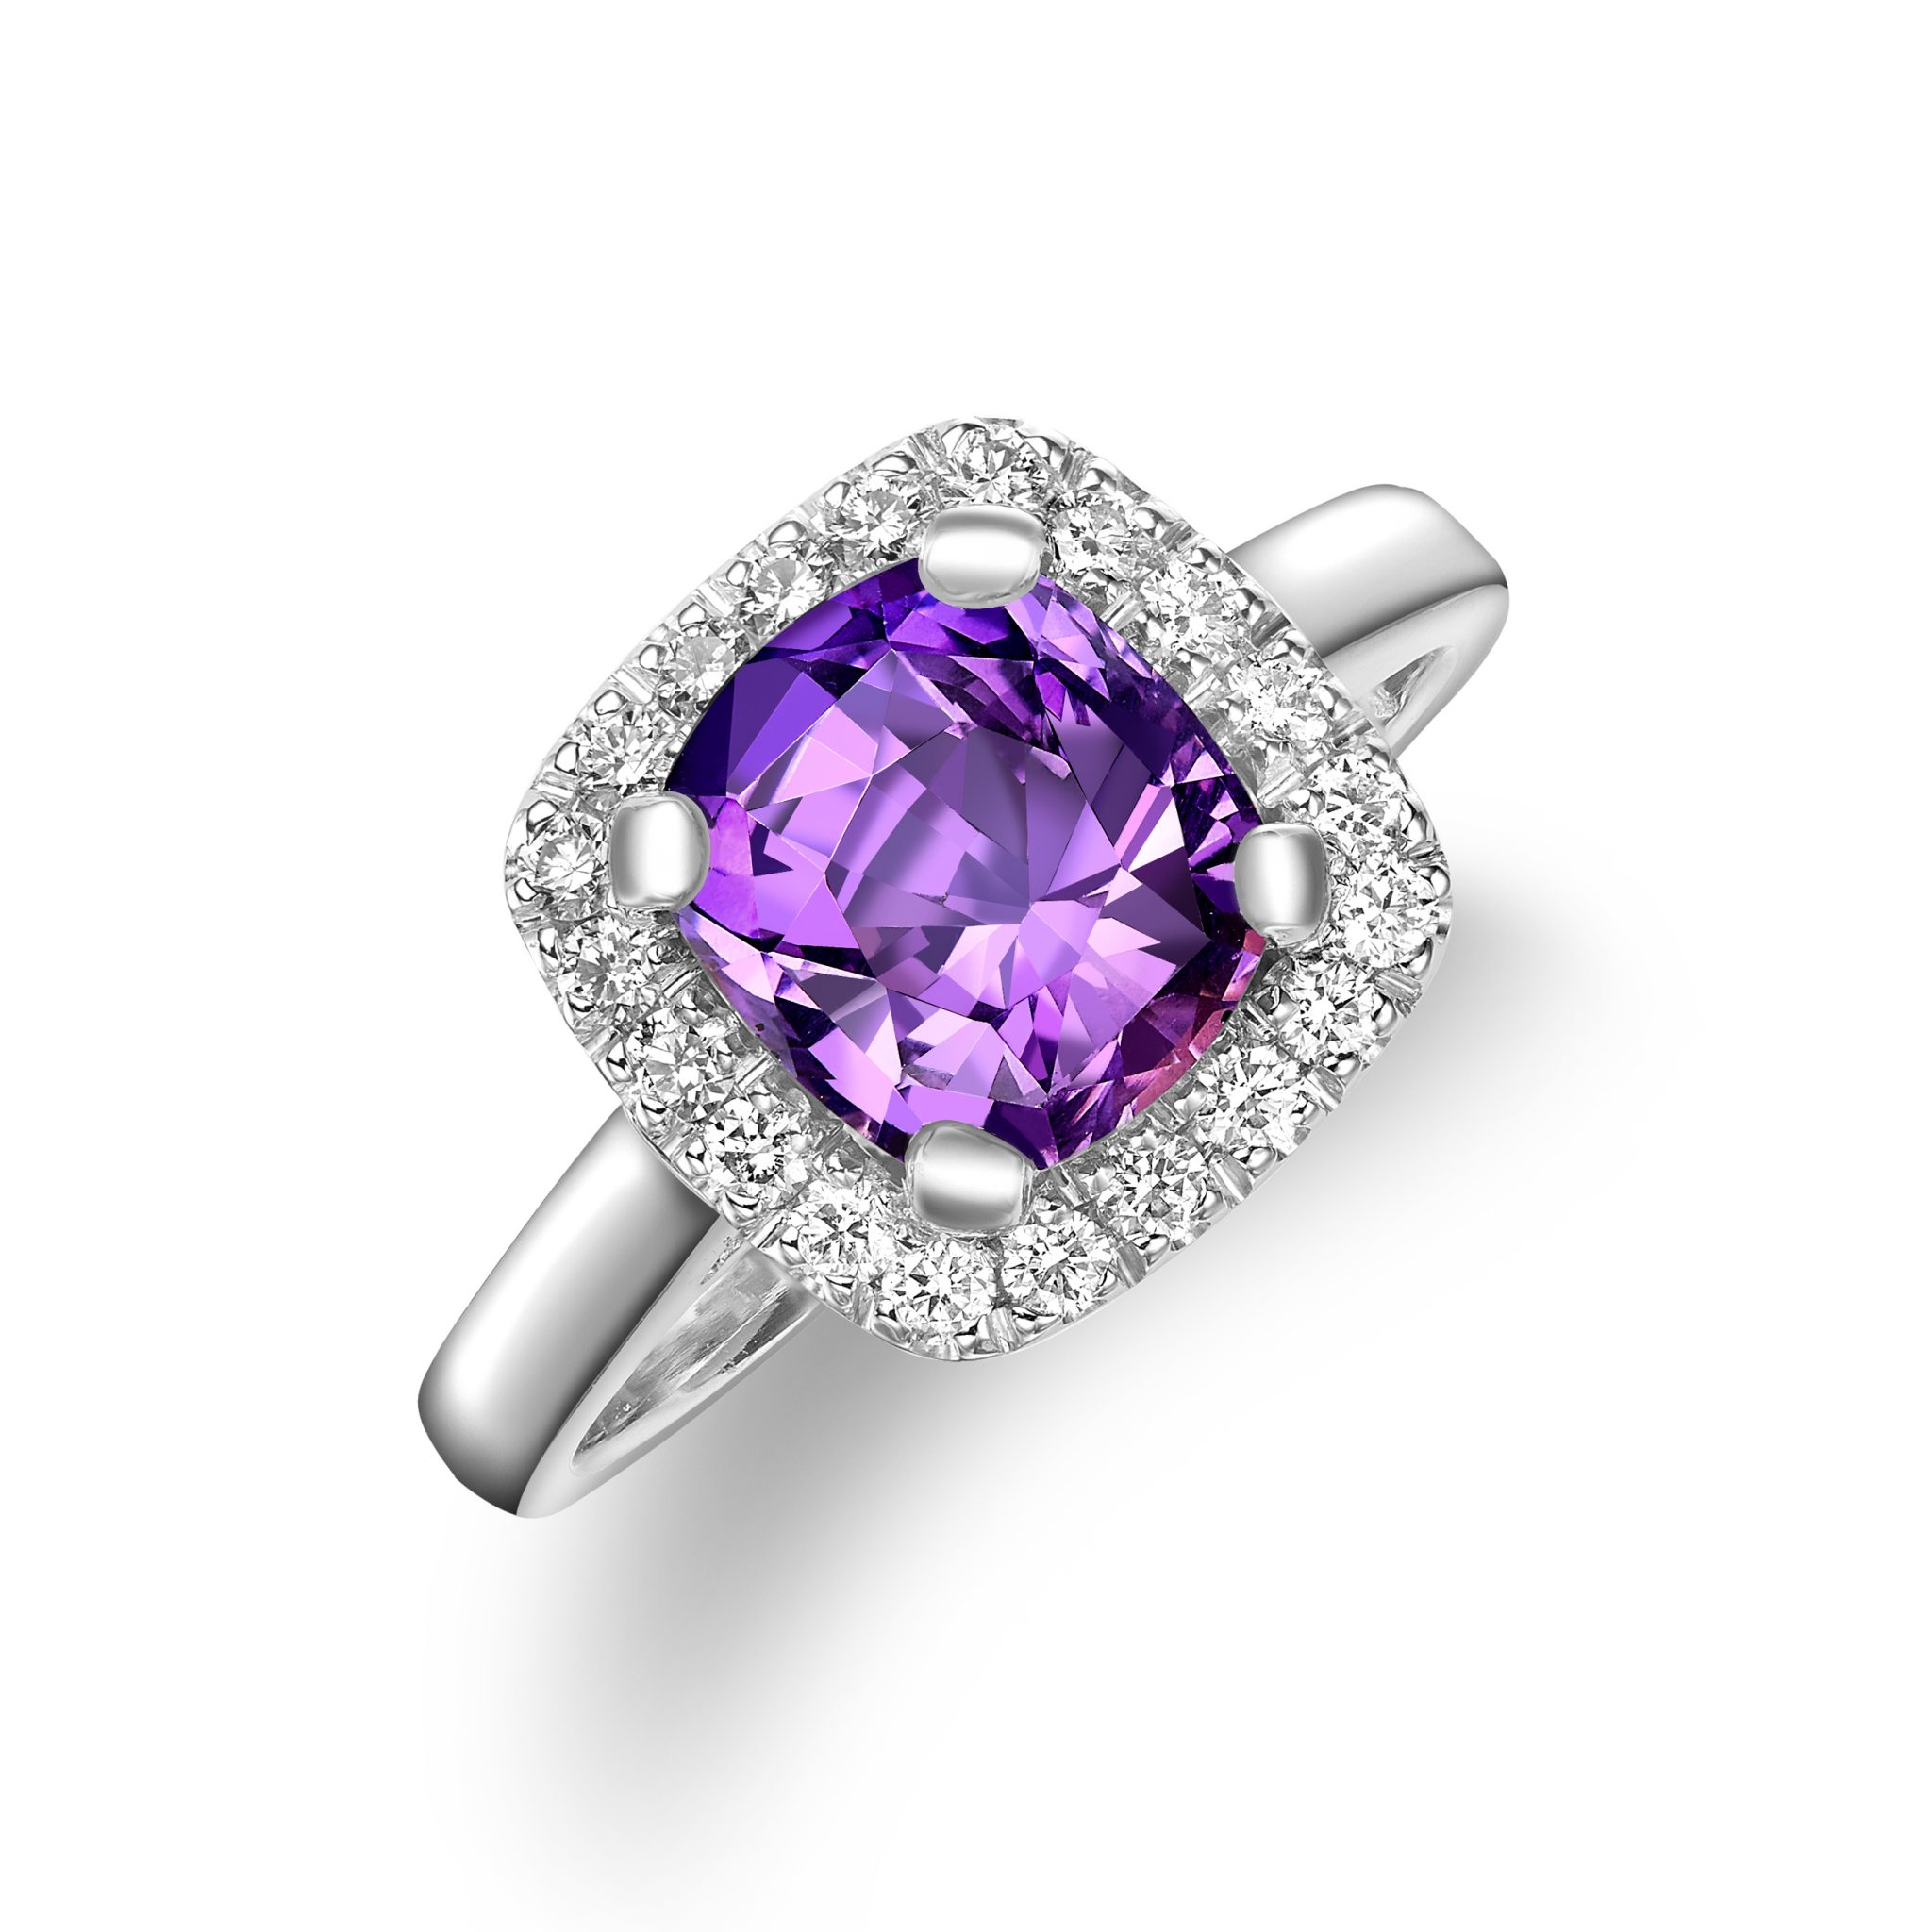 Cushion purple sapphire ring with diamond